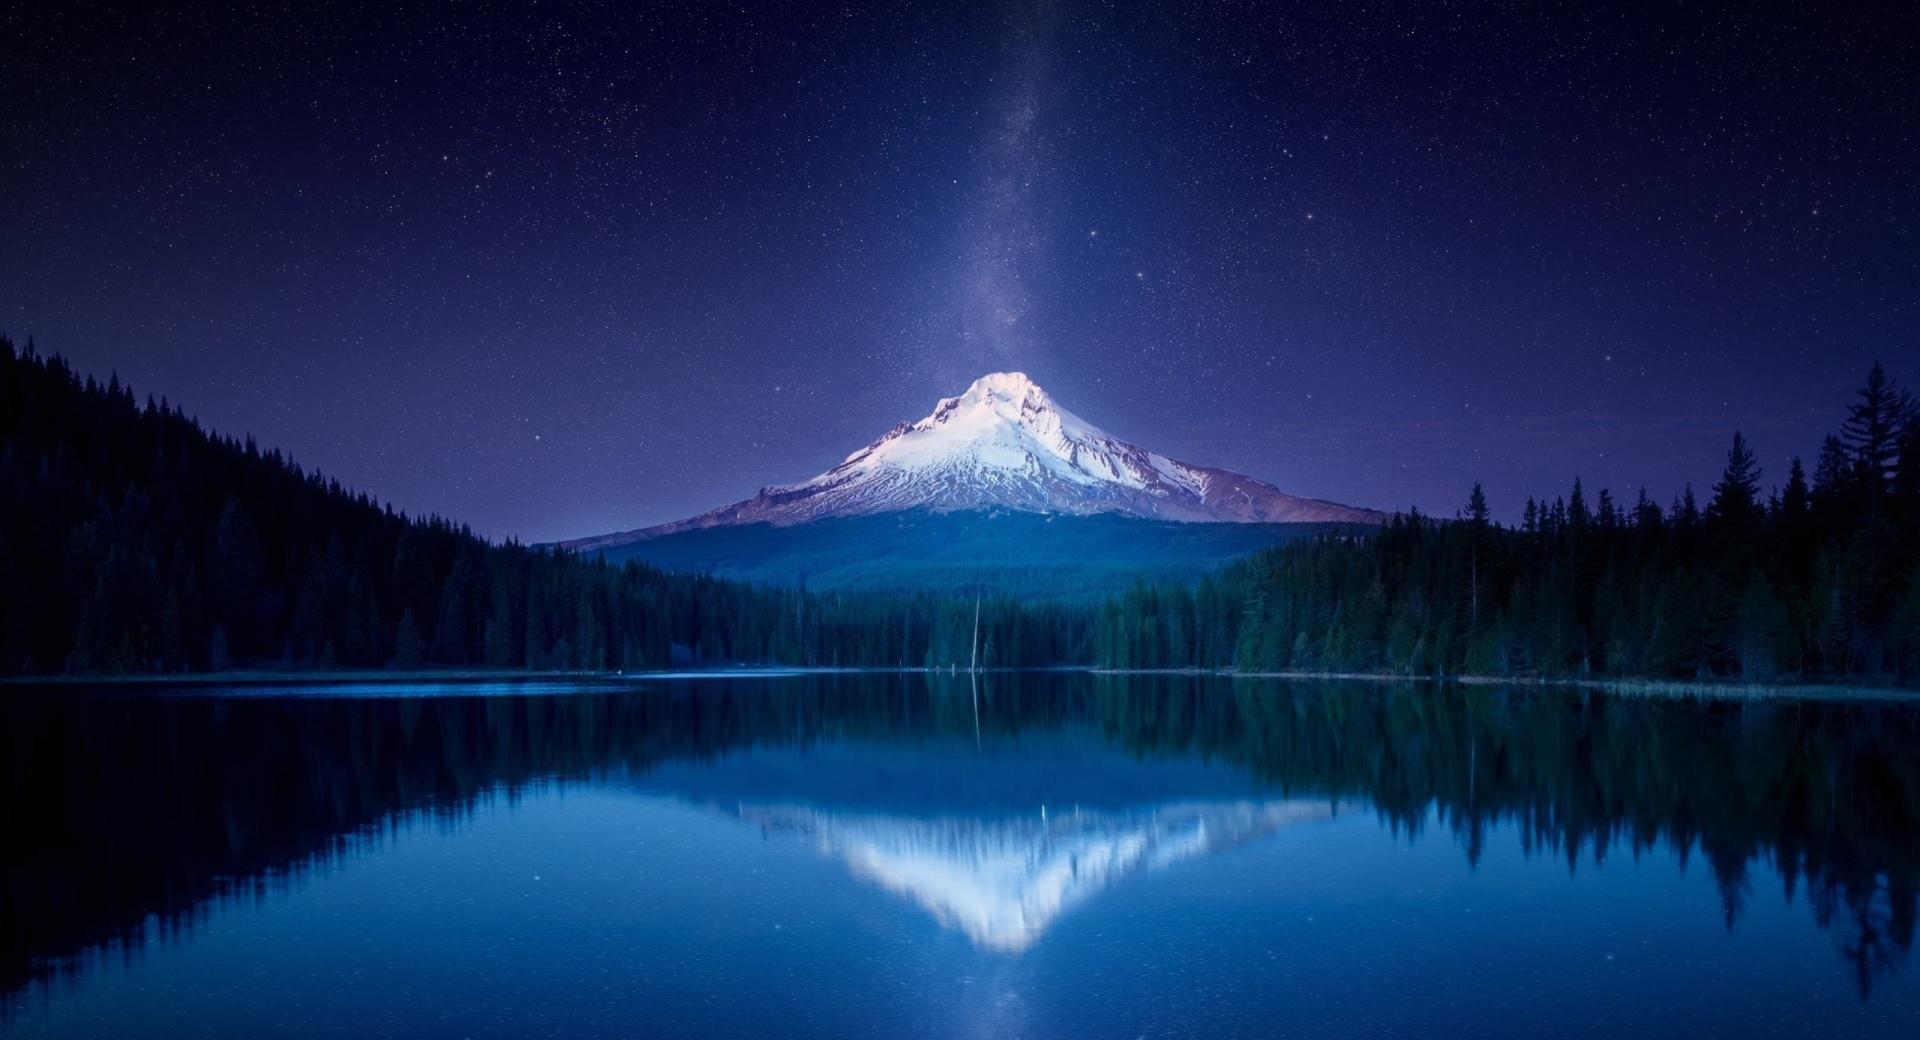 Amazing Mountain Milky Way by Yakub Nihat at 1024 x 1024 iPad size wallpapers HD quality